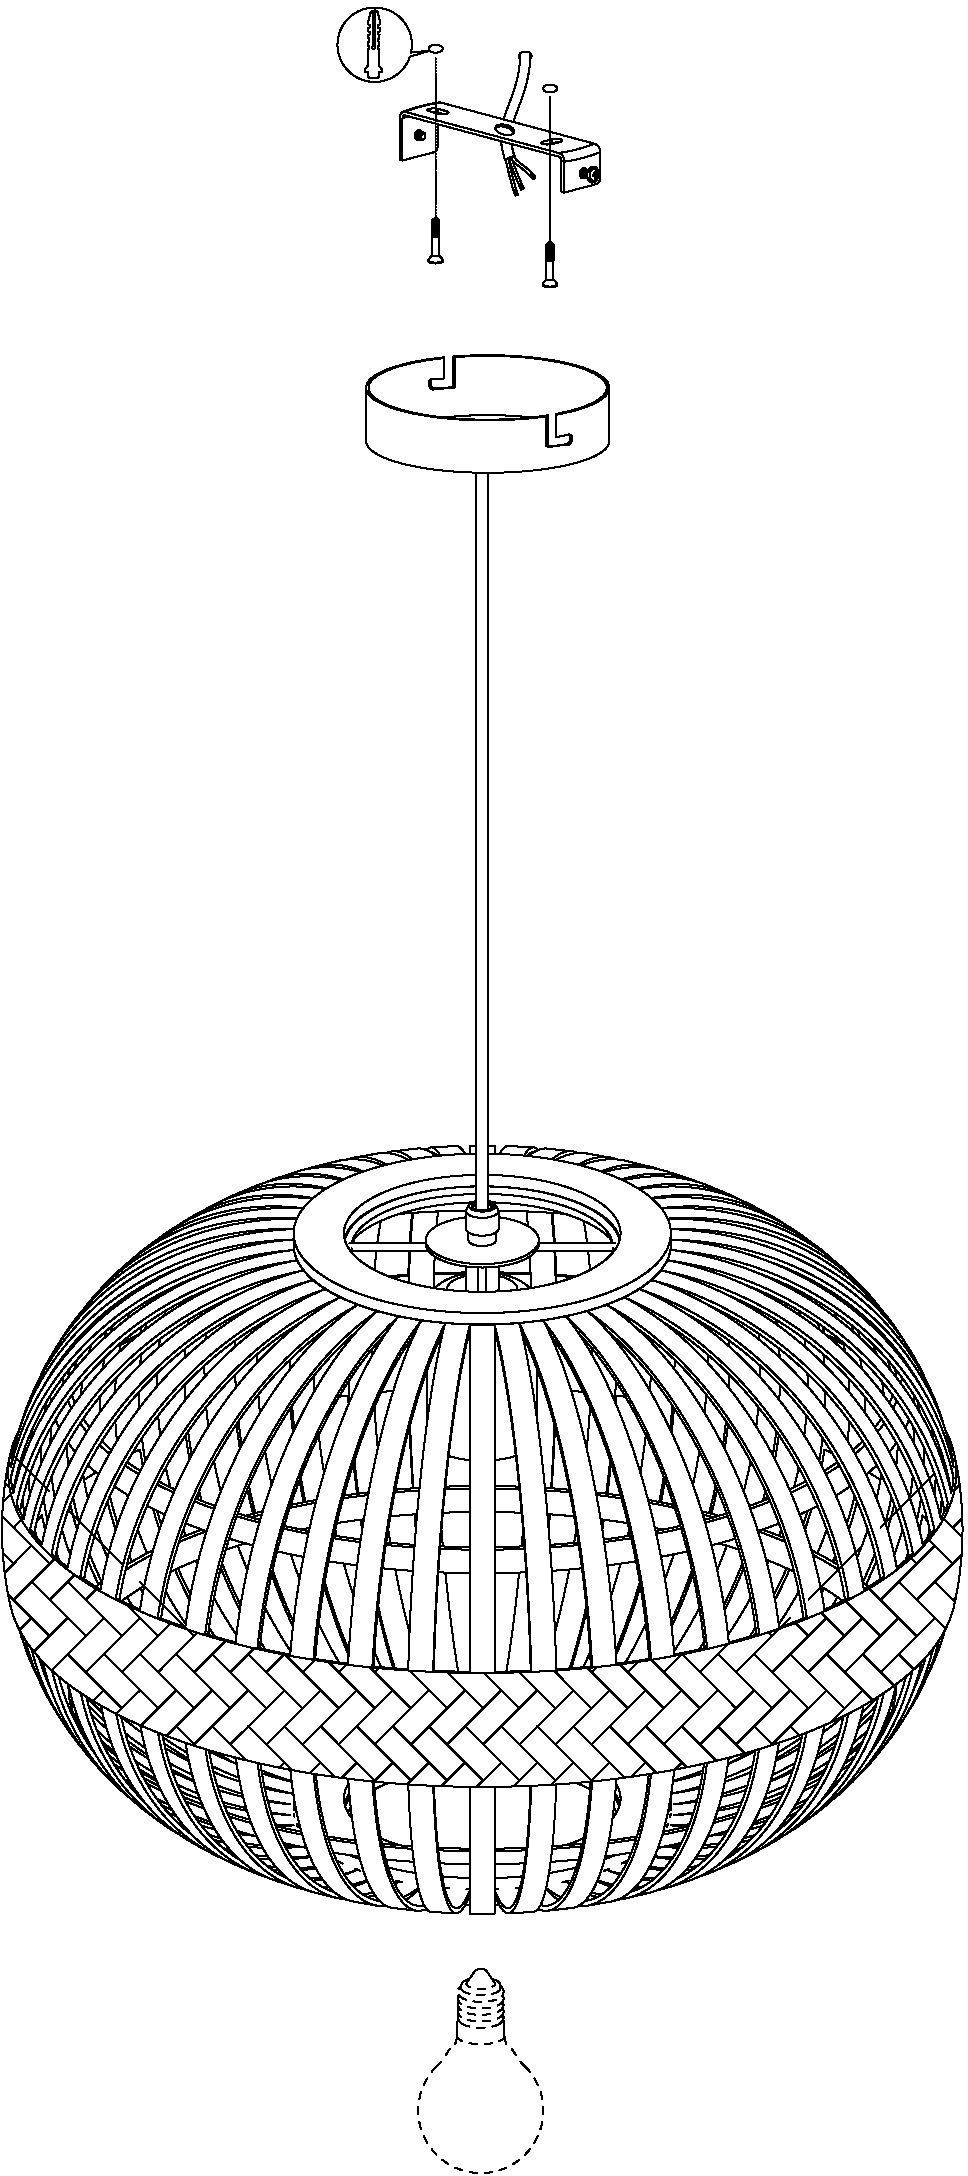 (je Holz EGLO 60W) Lampe AMSFIELD, aus H110 / E27 Leuchtmittel, 1 x Pendelleuchte / Ø38 / ohne braun max. cm exkl. x